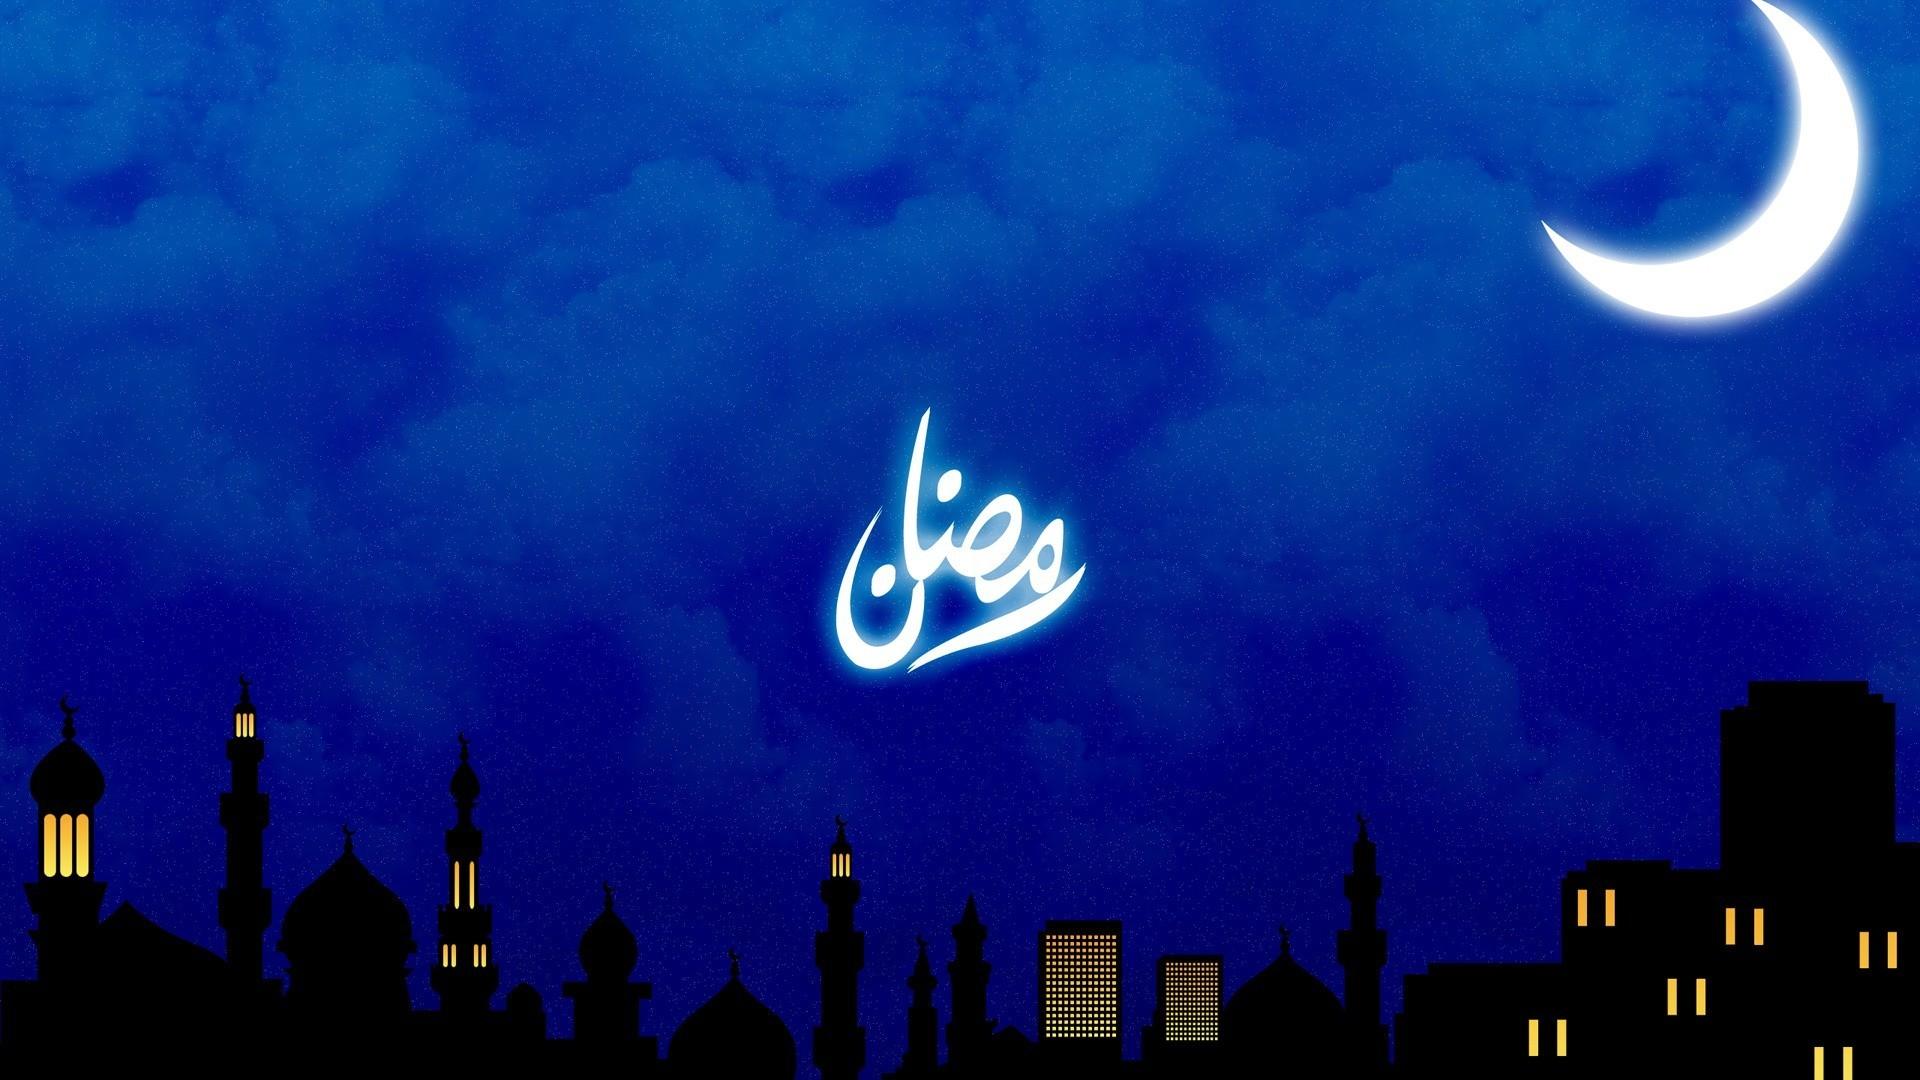 islamic wallpaper hd,sky,blue,light,night,cloud